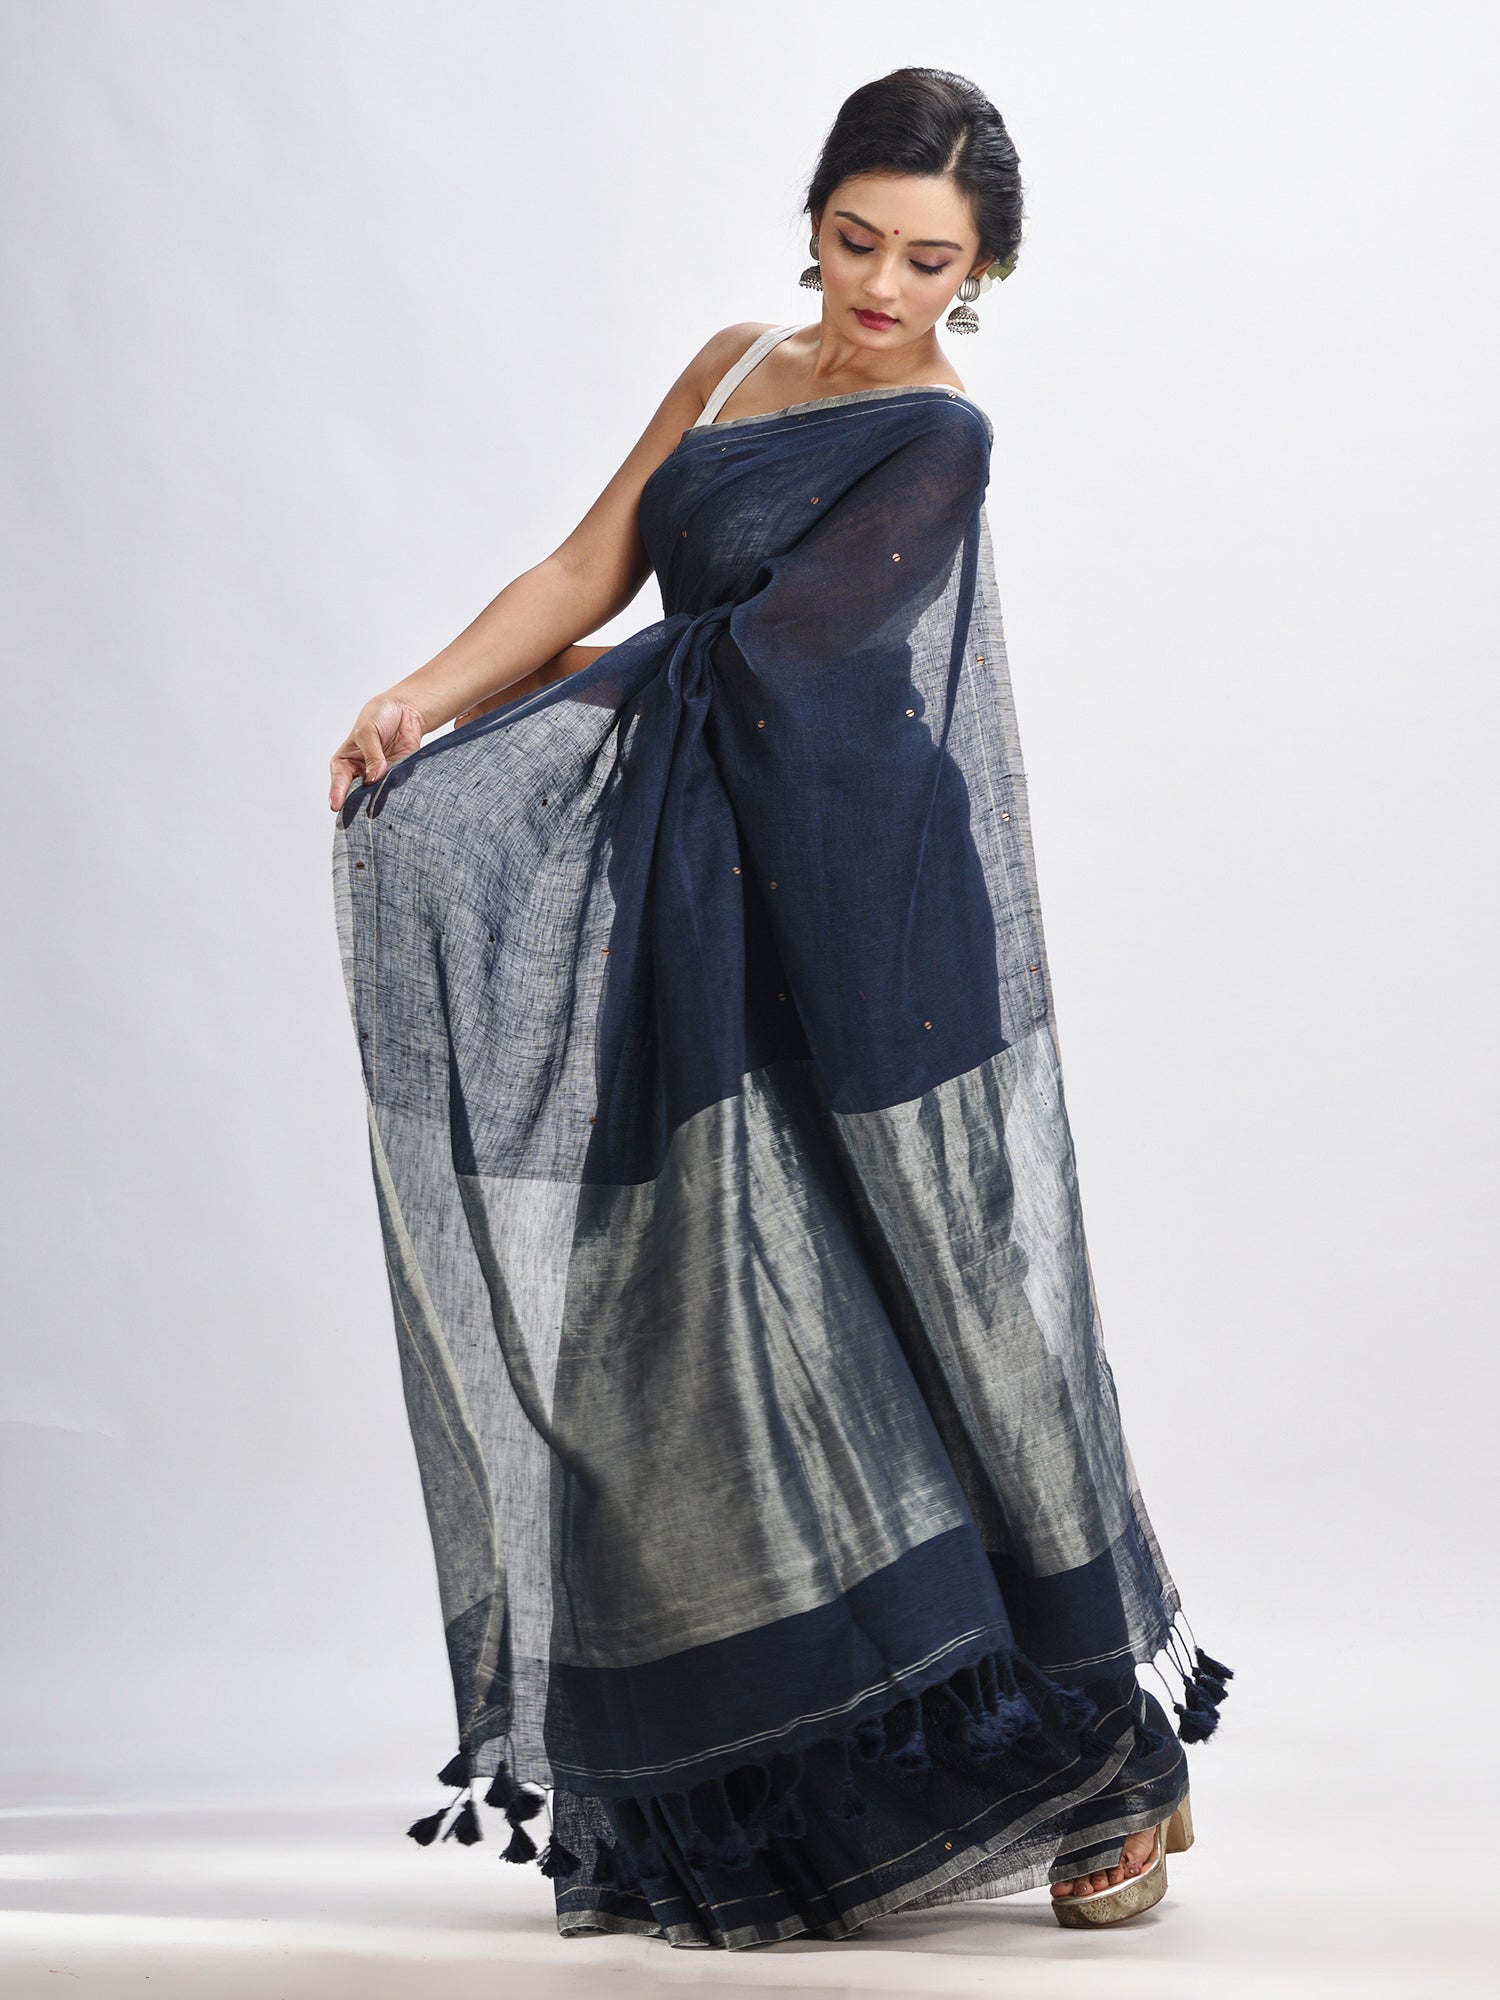 Women's Nevy blue linen all body cumki in pallu zori handloom saree - Angoshobha